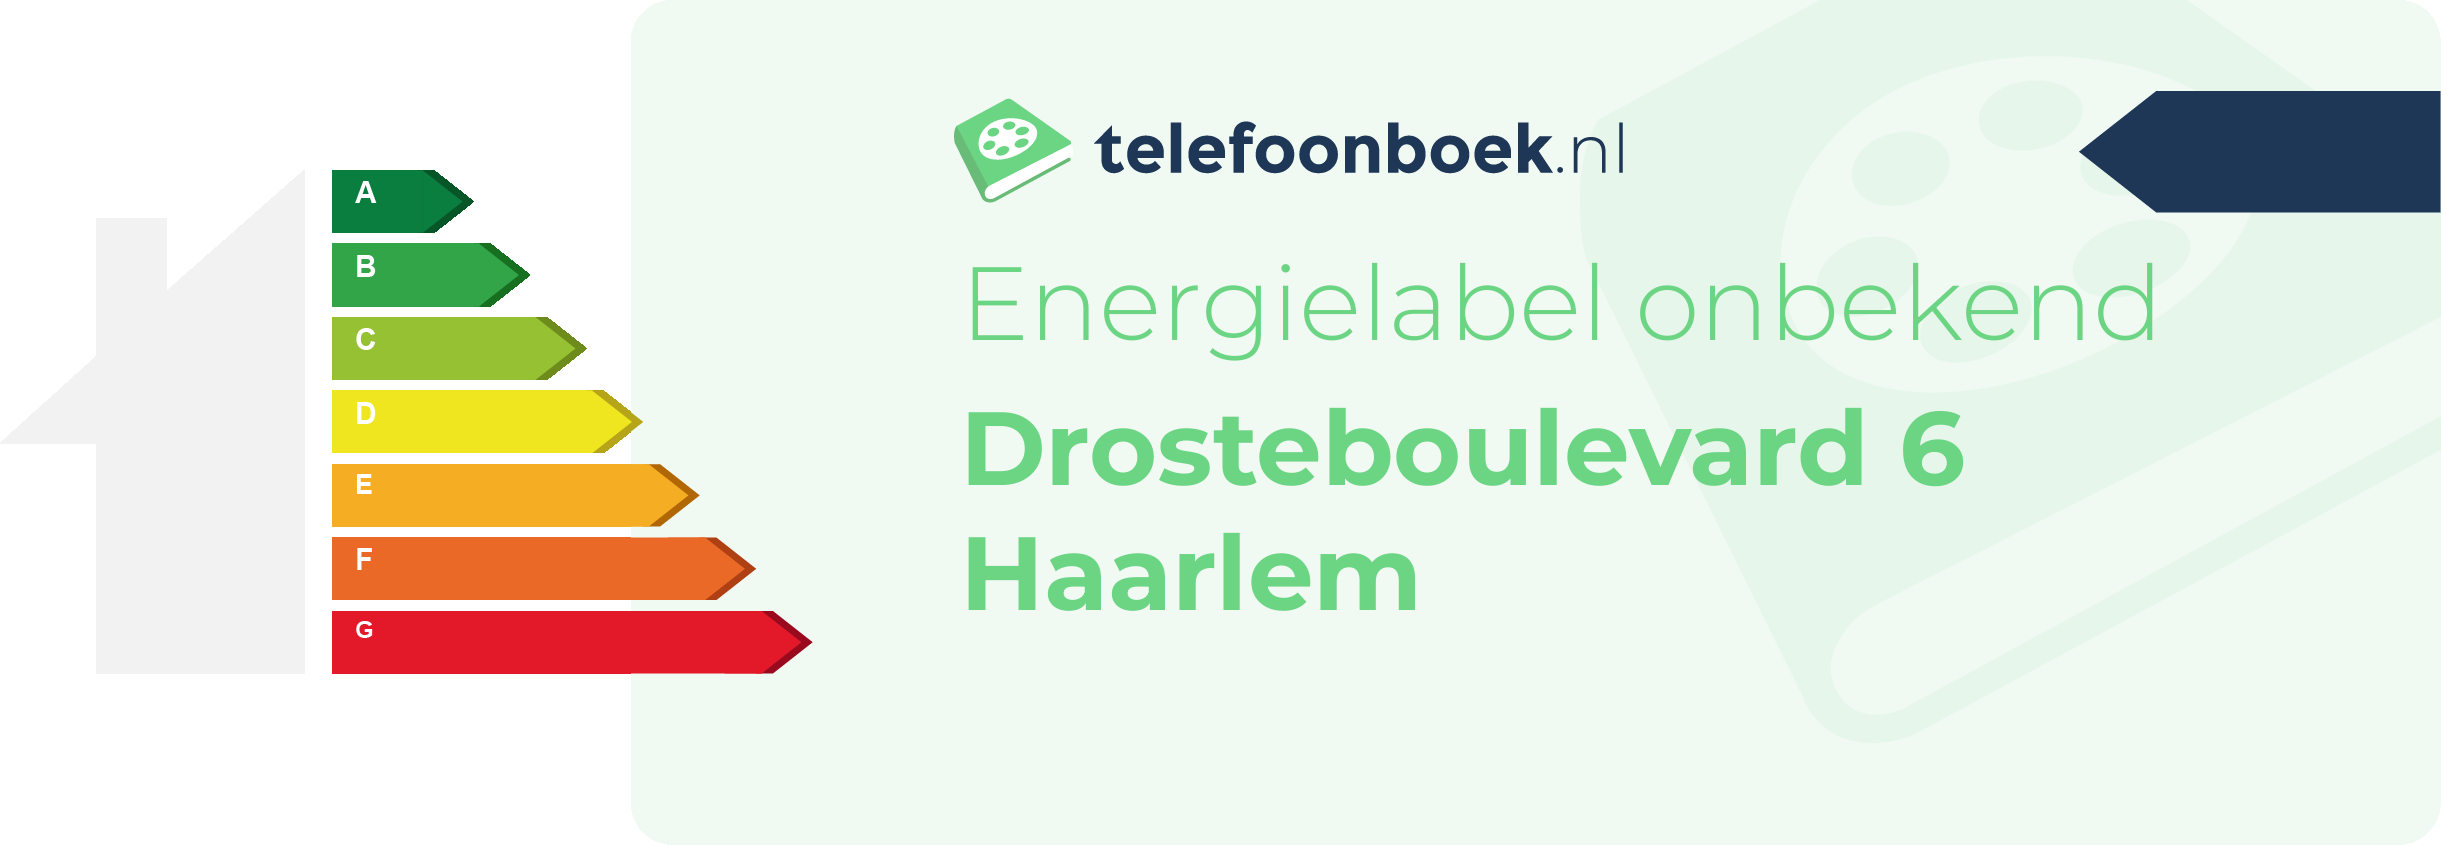 Energielabel Drosteboulevard 6 Haarlem